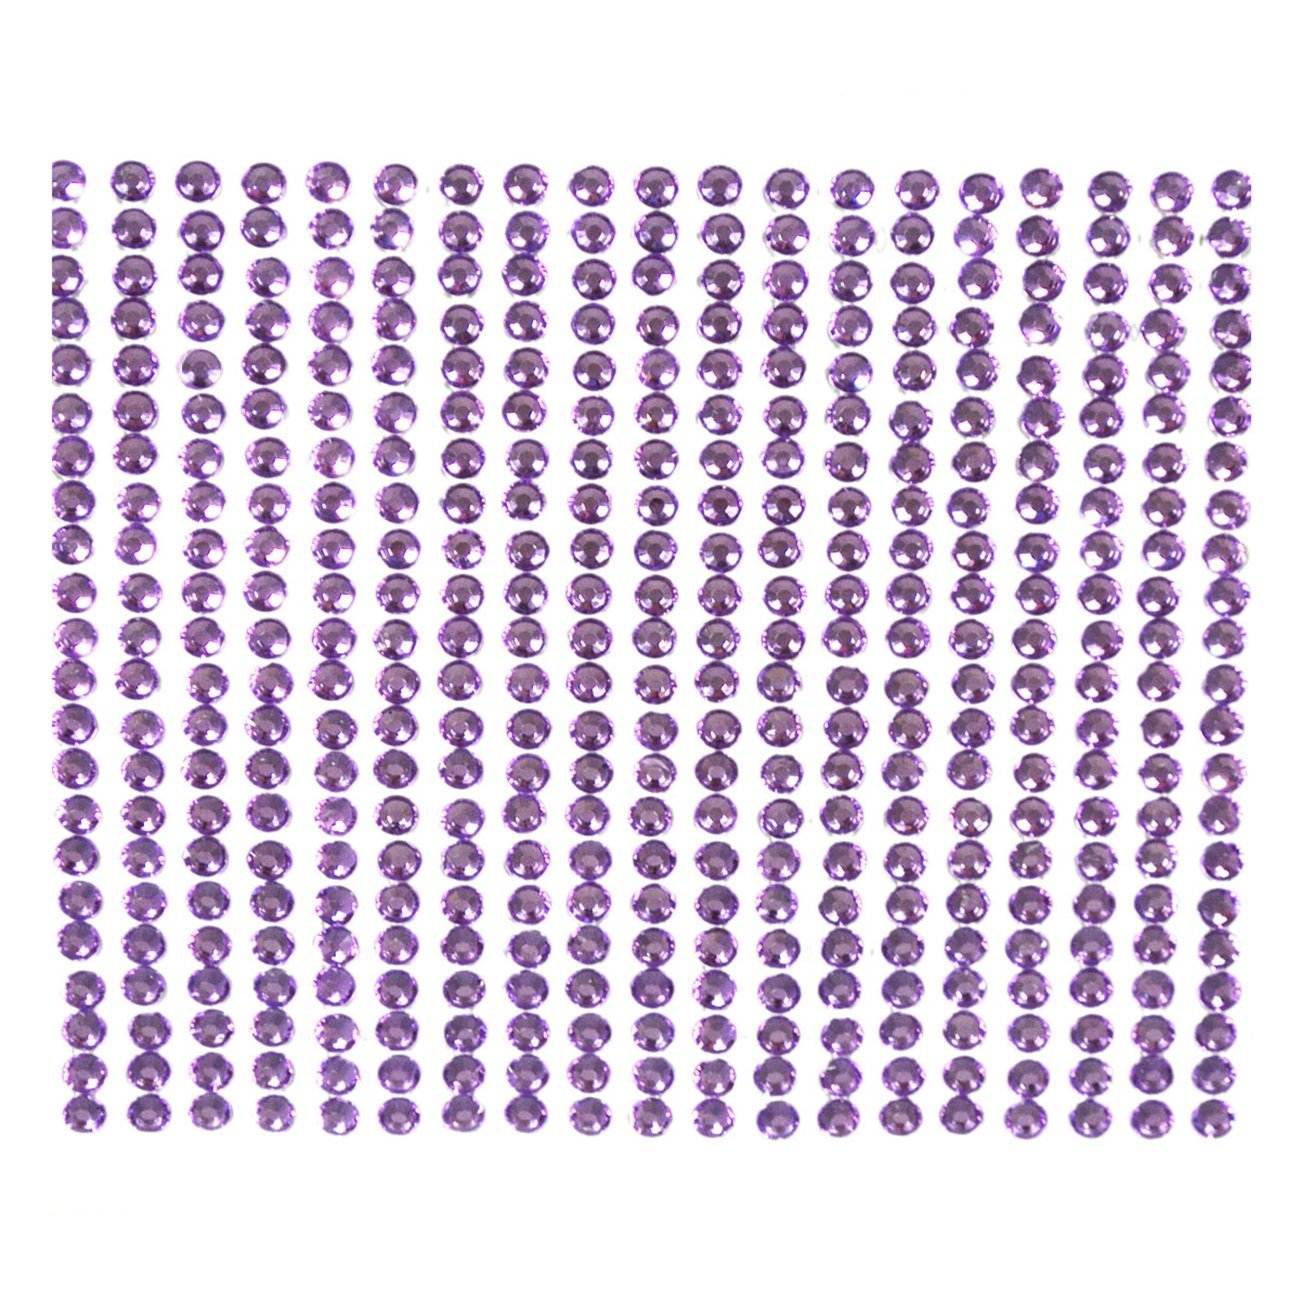 Wrapables Purple Crystal Diamond Sticker 4mm Adhesive Rhinestones, 846 pieces